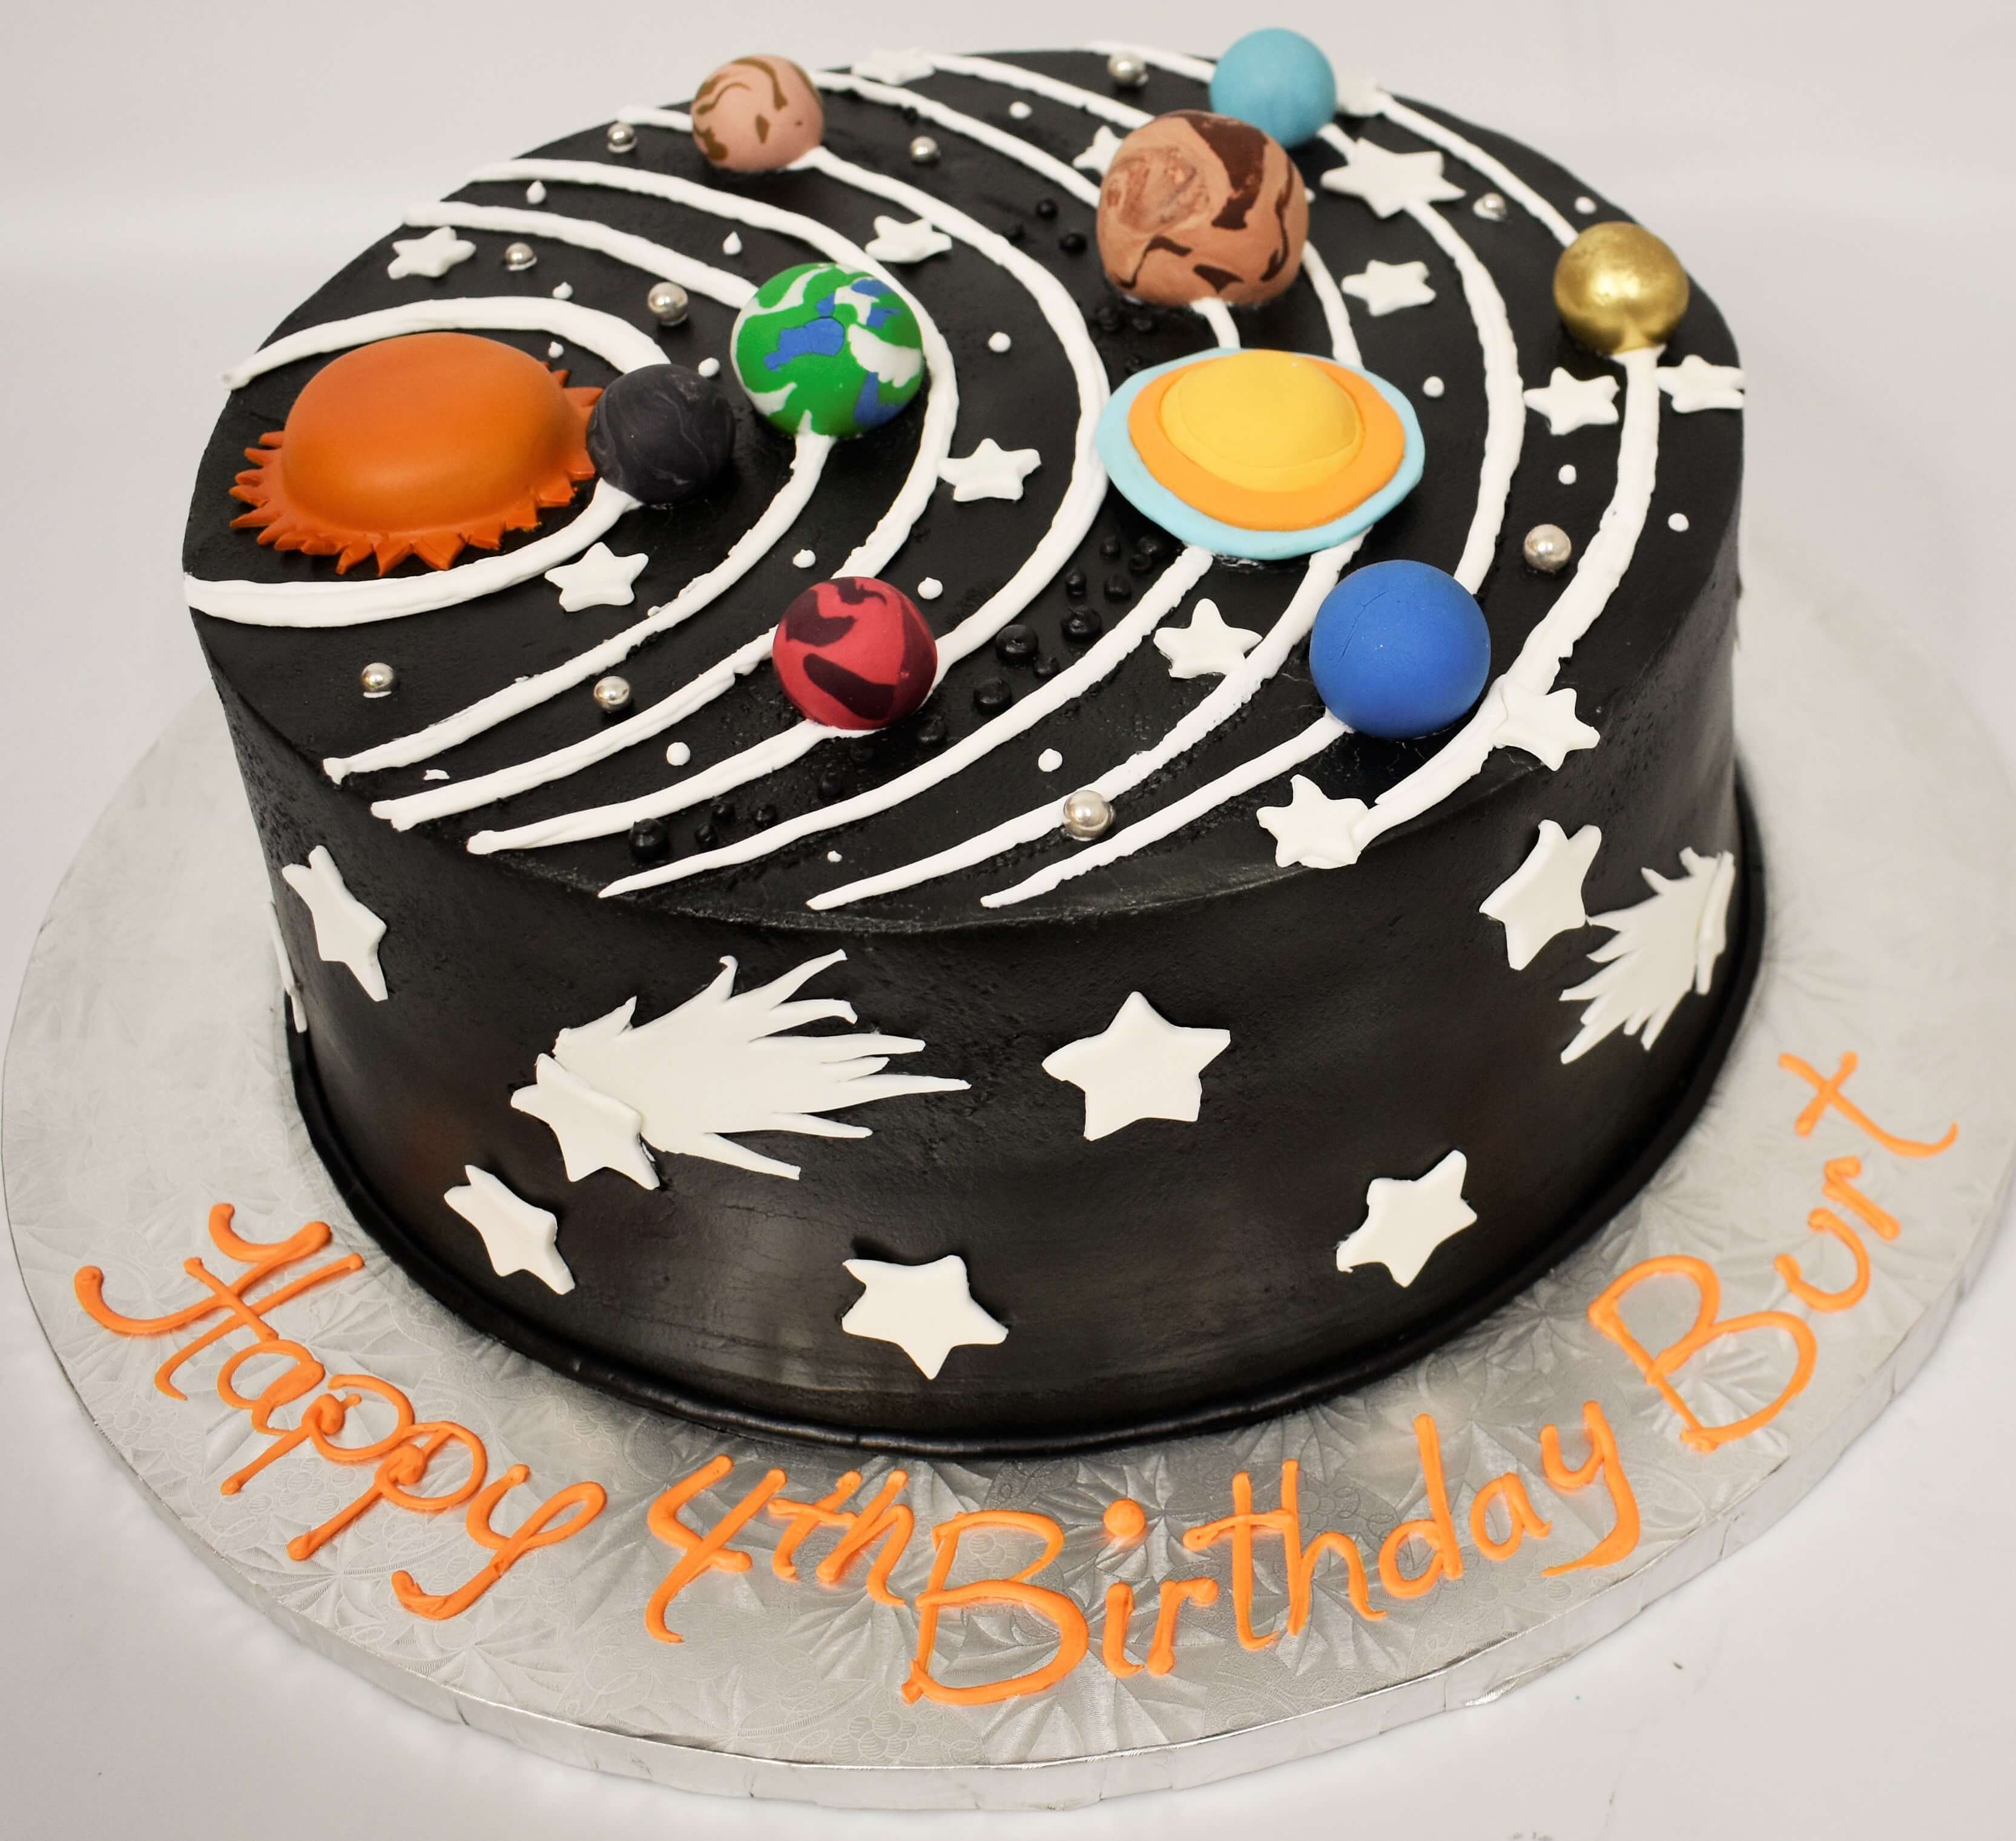 McArthur's Bakery Custom Cake with 3D Solar System, Stars on sides